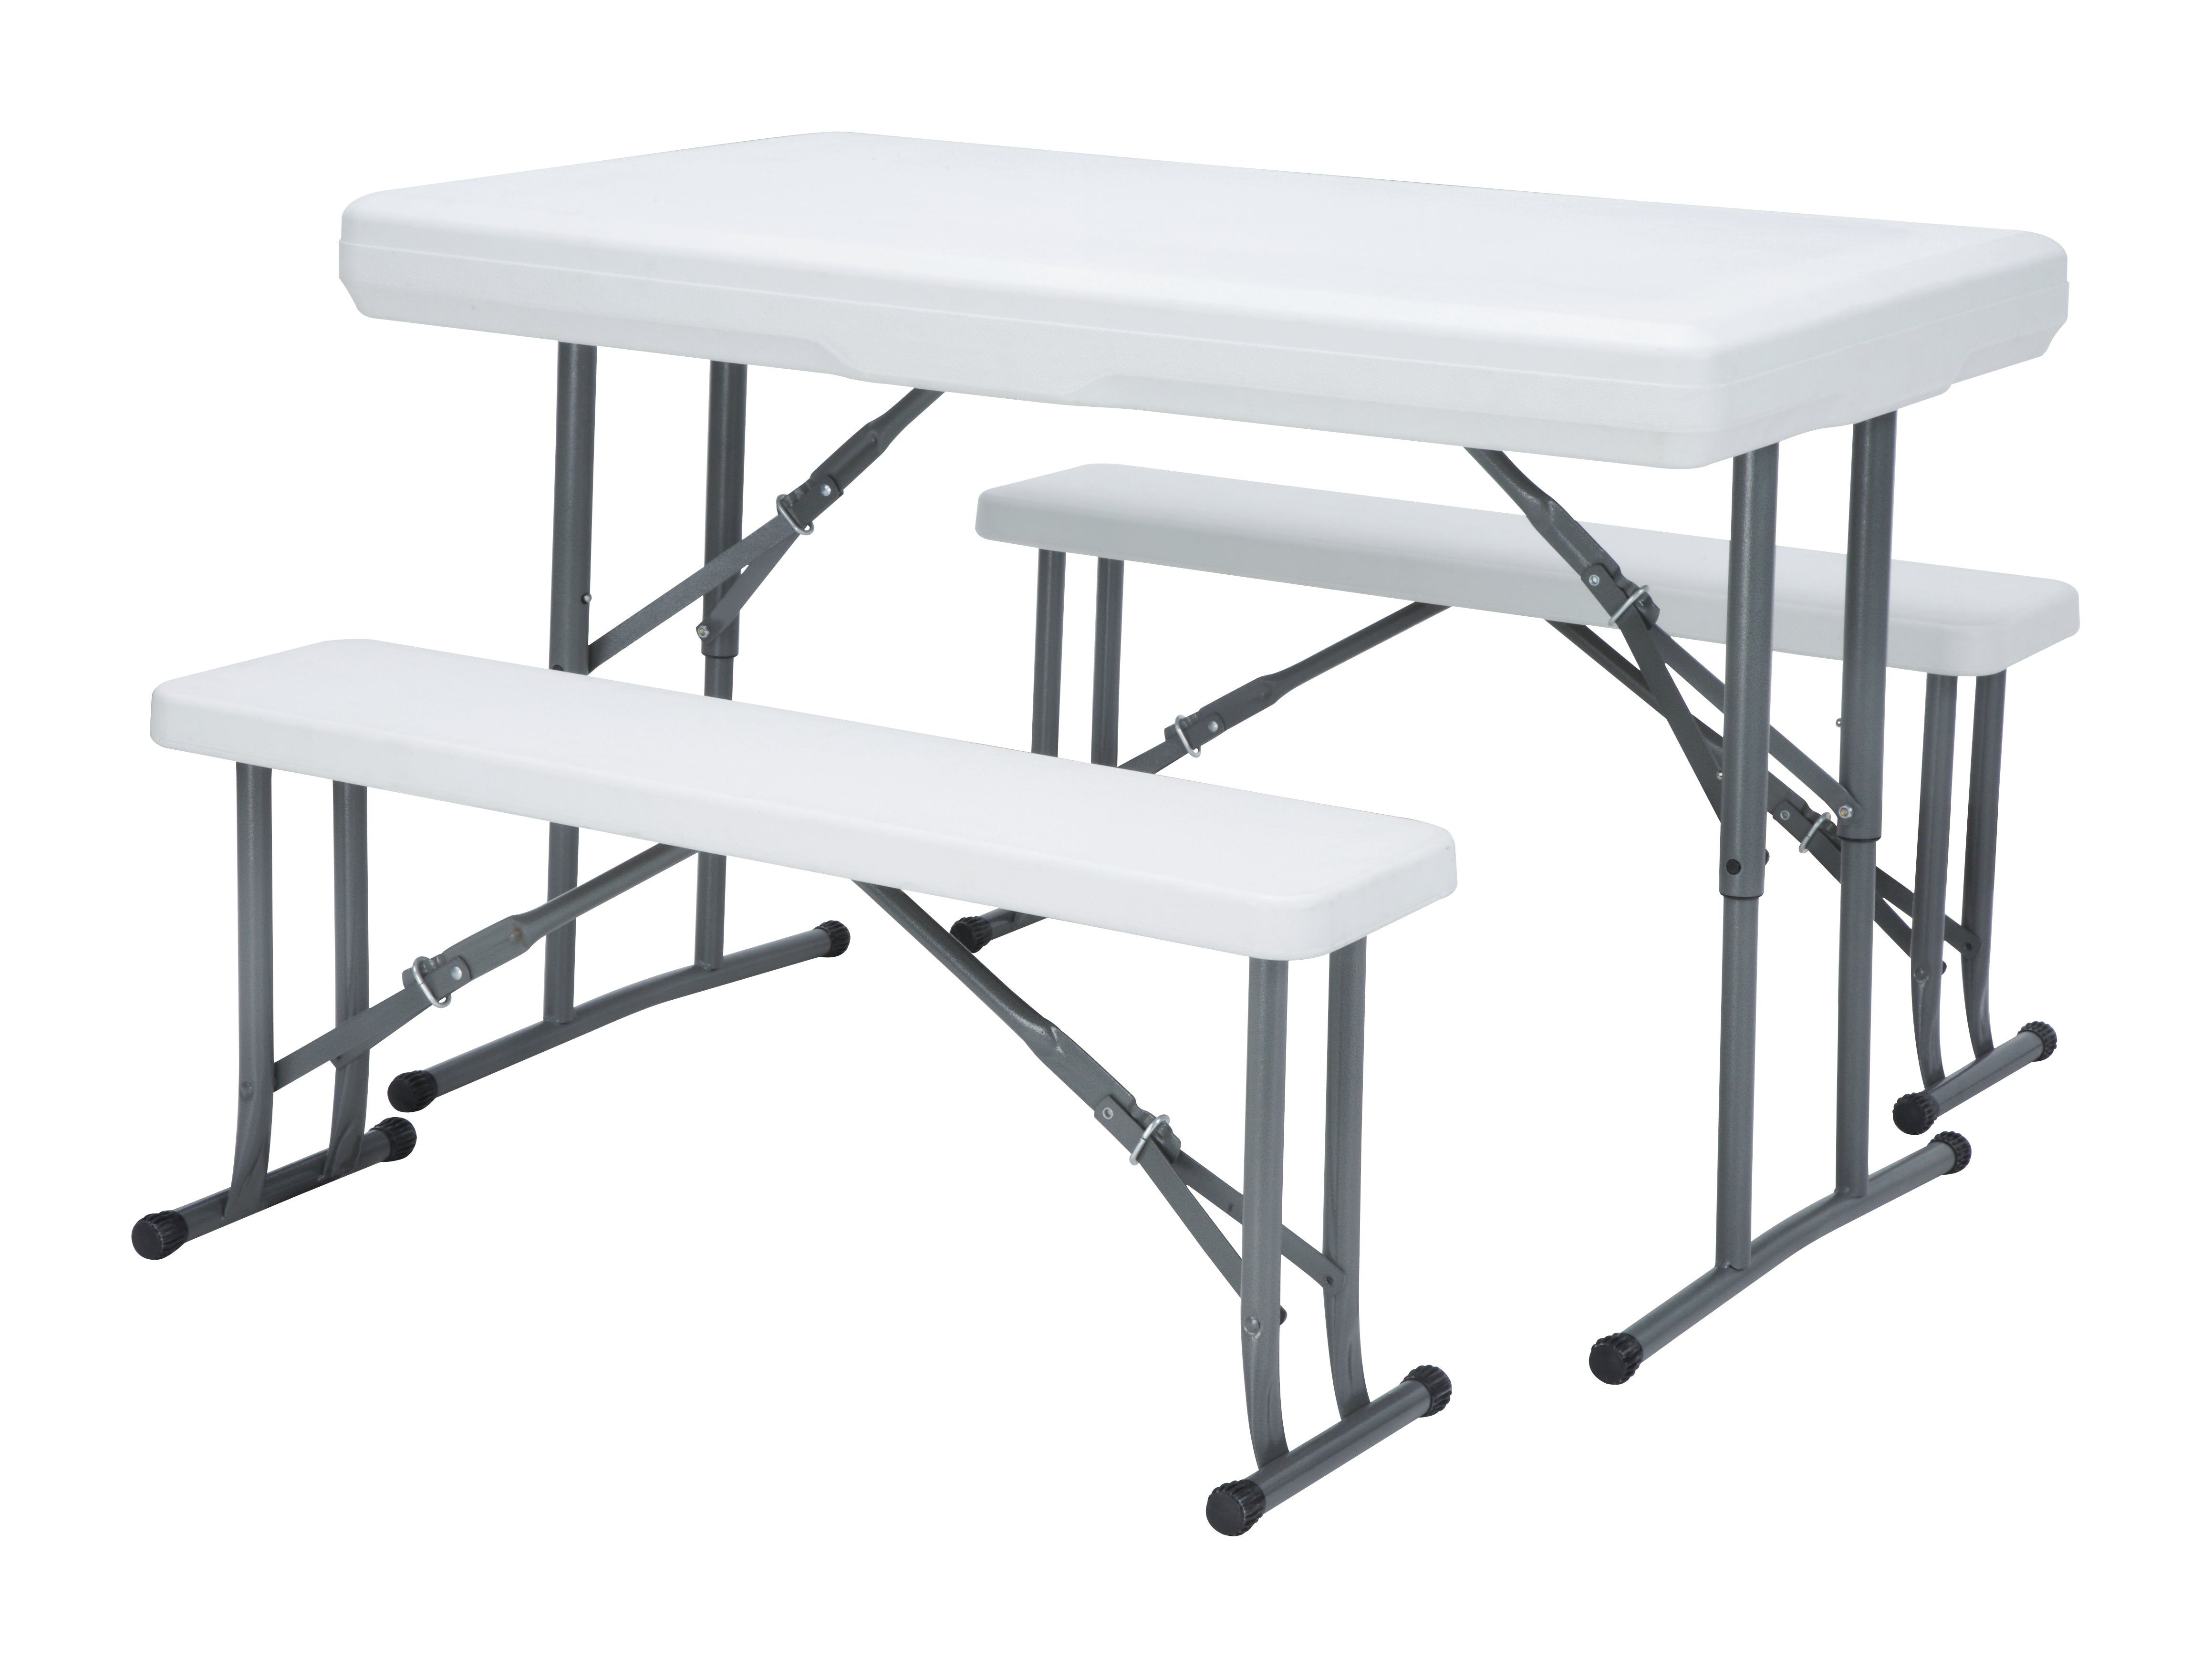 1 Meter Portable Folding HDPE Outdoor Picnic Garden Table with 2 Bench - White